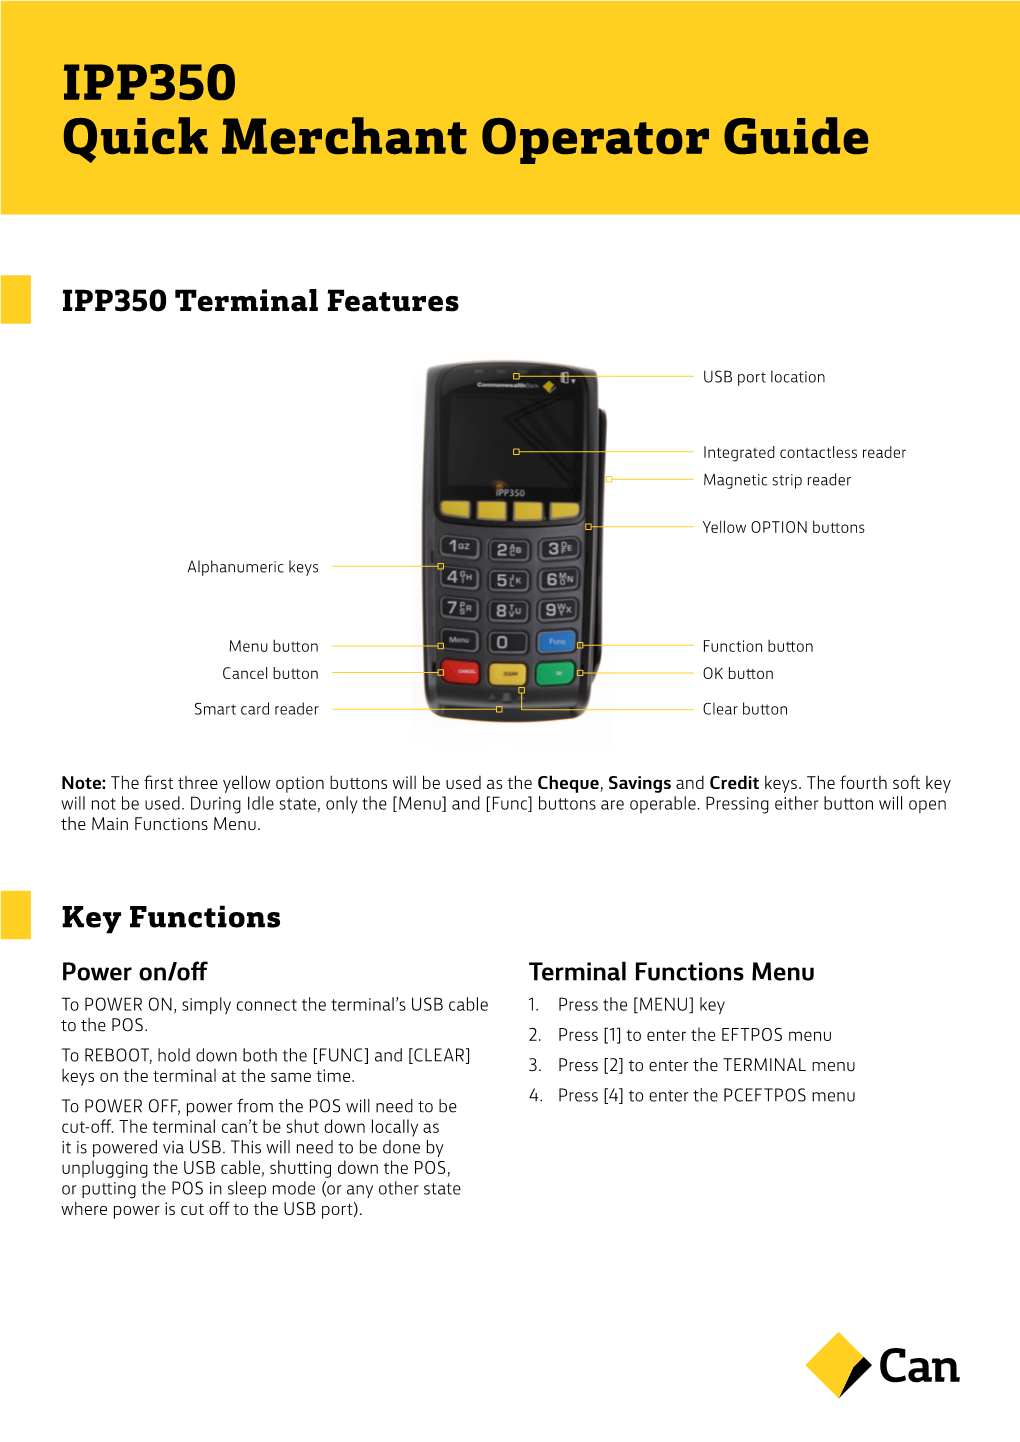 IPP350 Quick Merchant Operator Guide